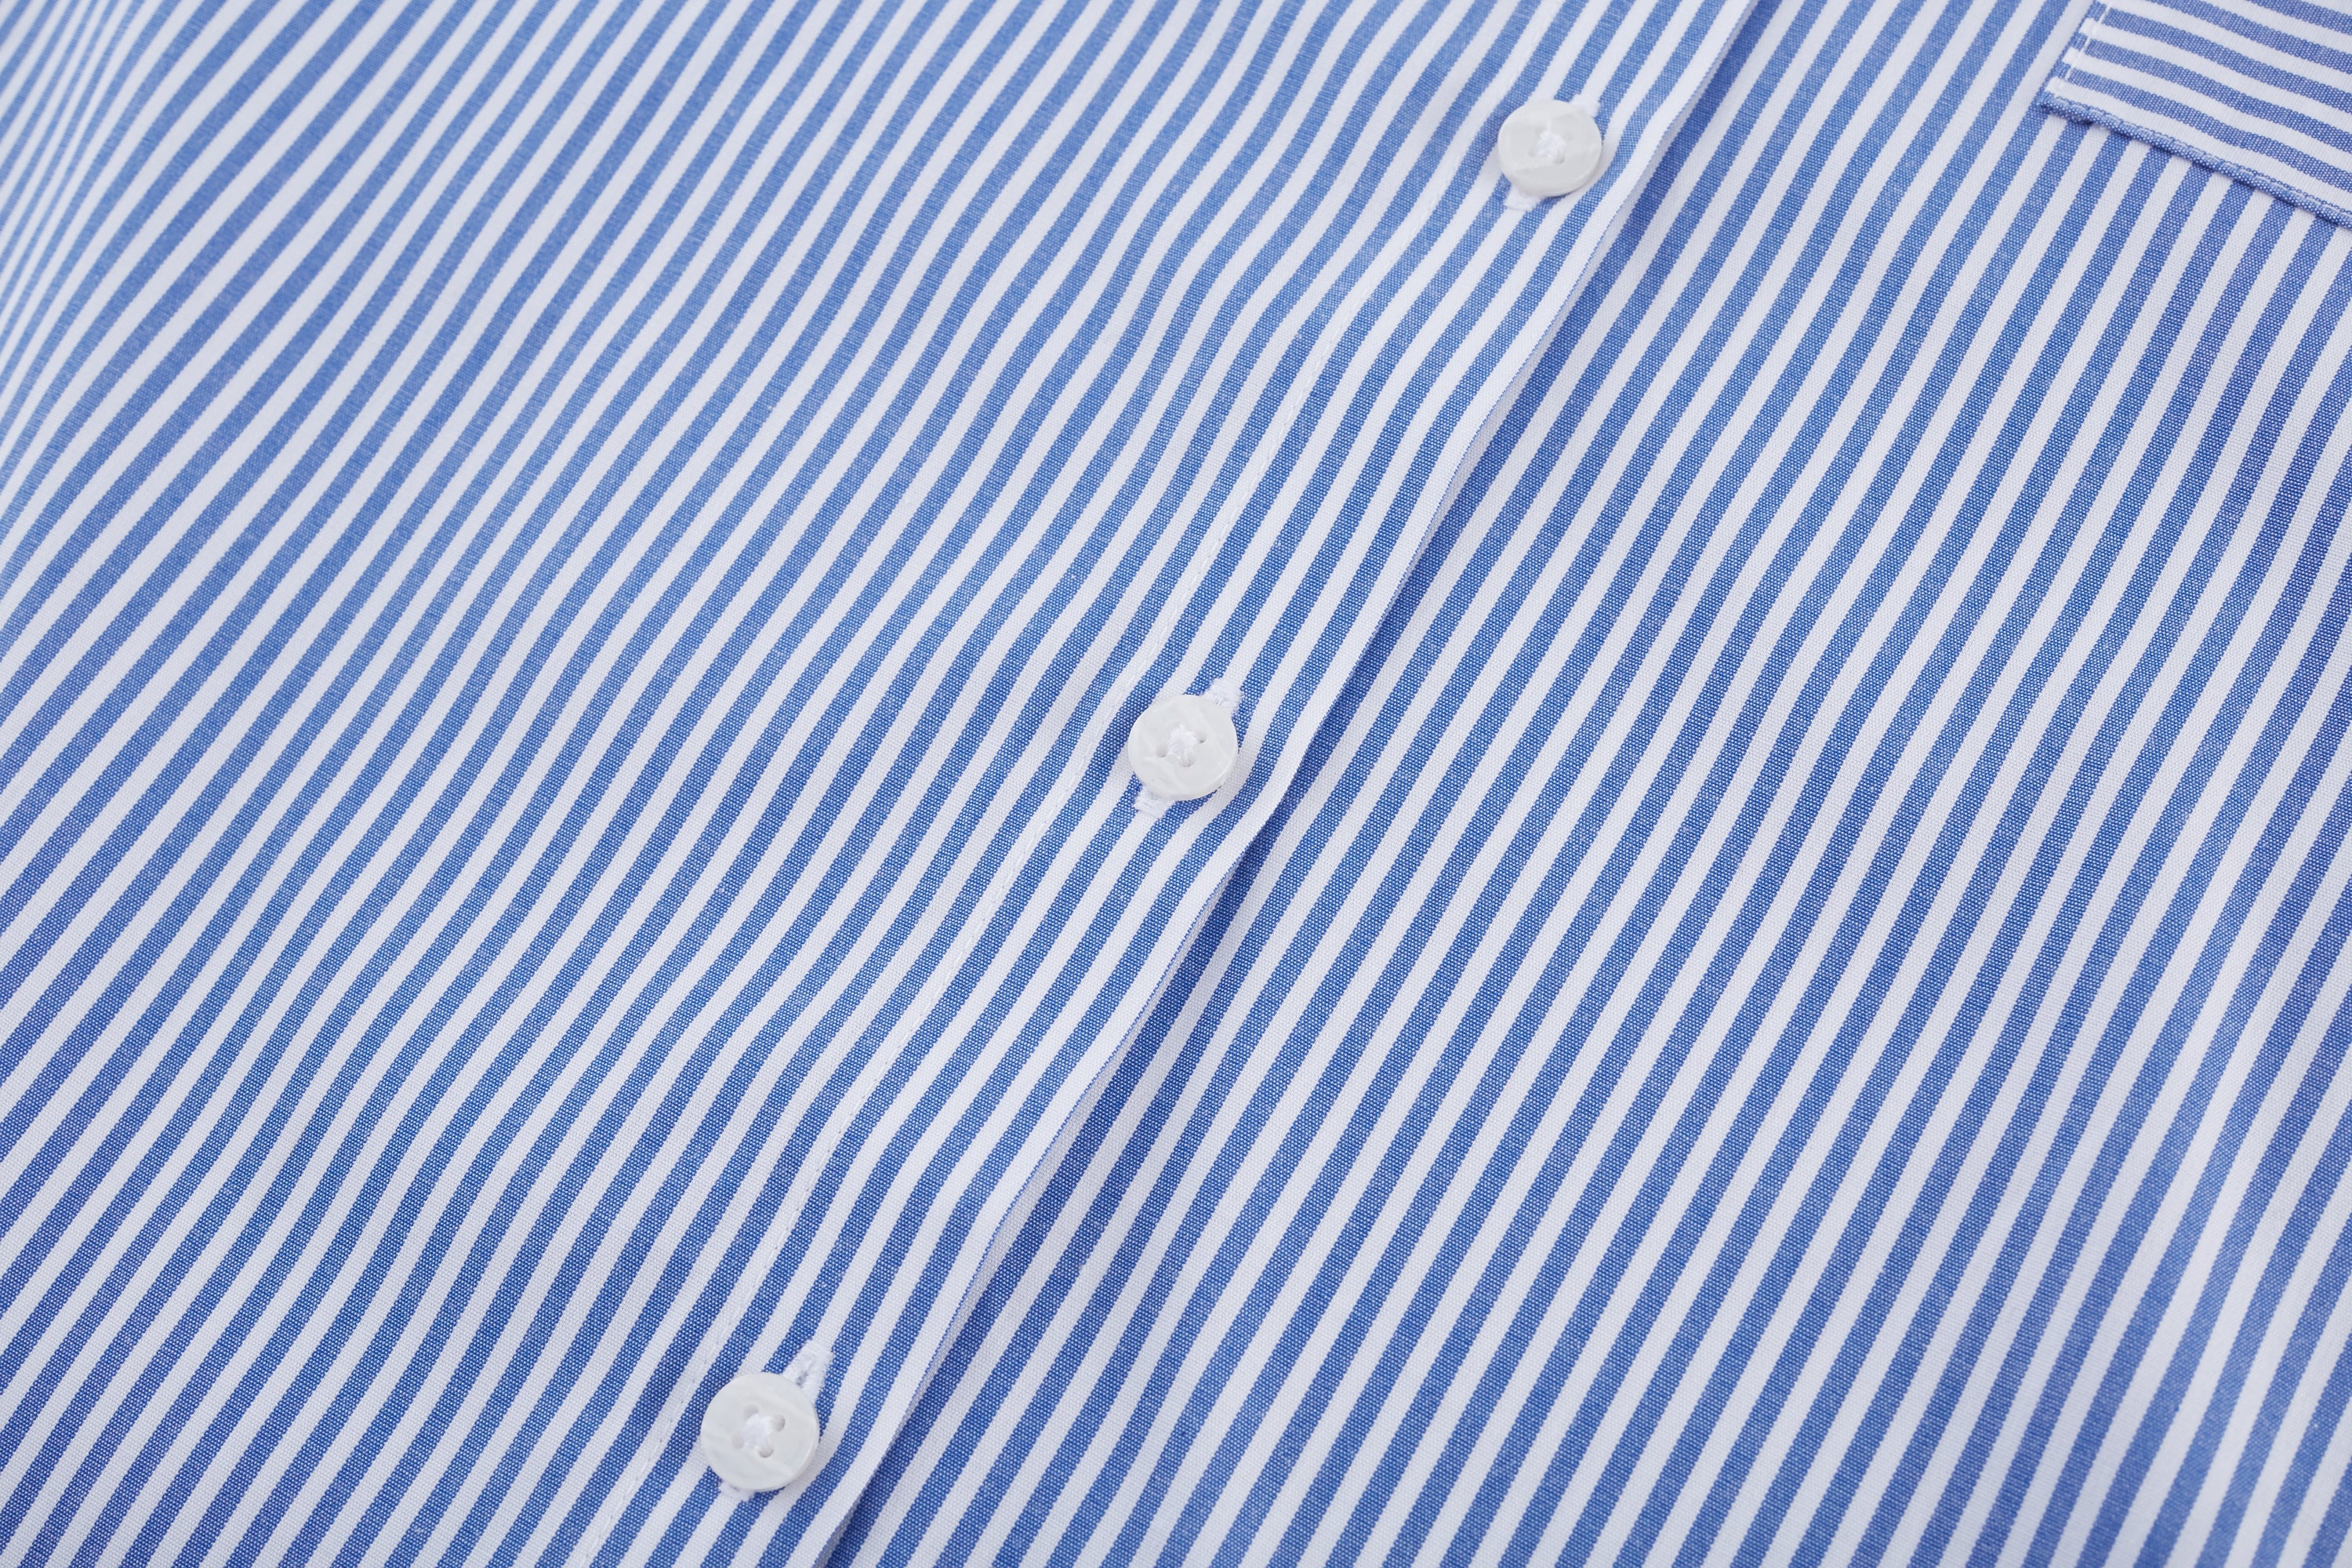 Ocean Cotton Rich Stretchable Stripe Poplin Shirt